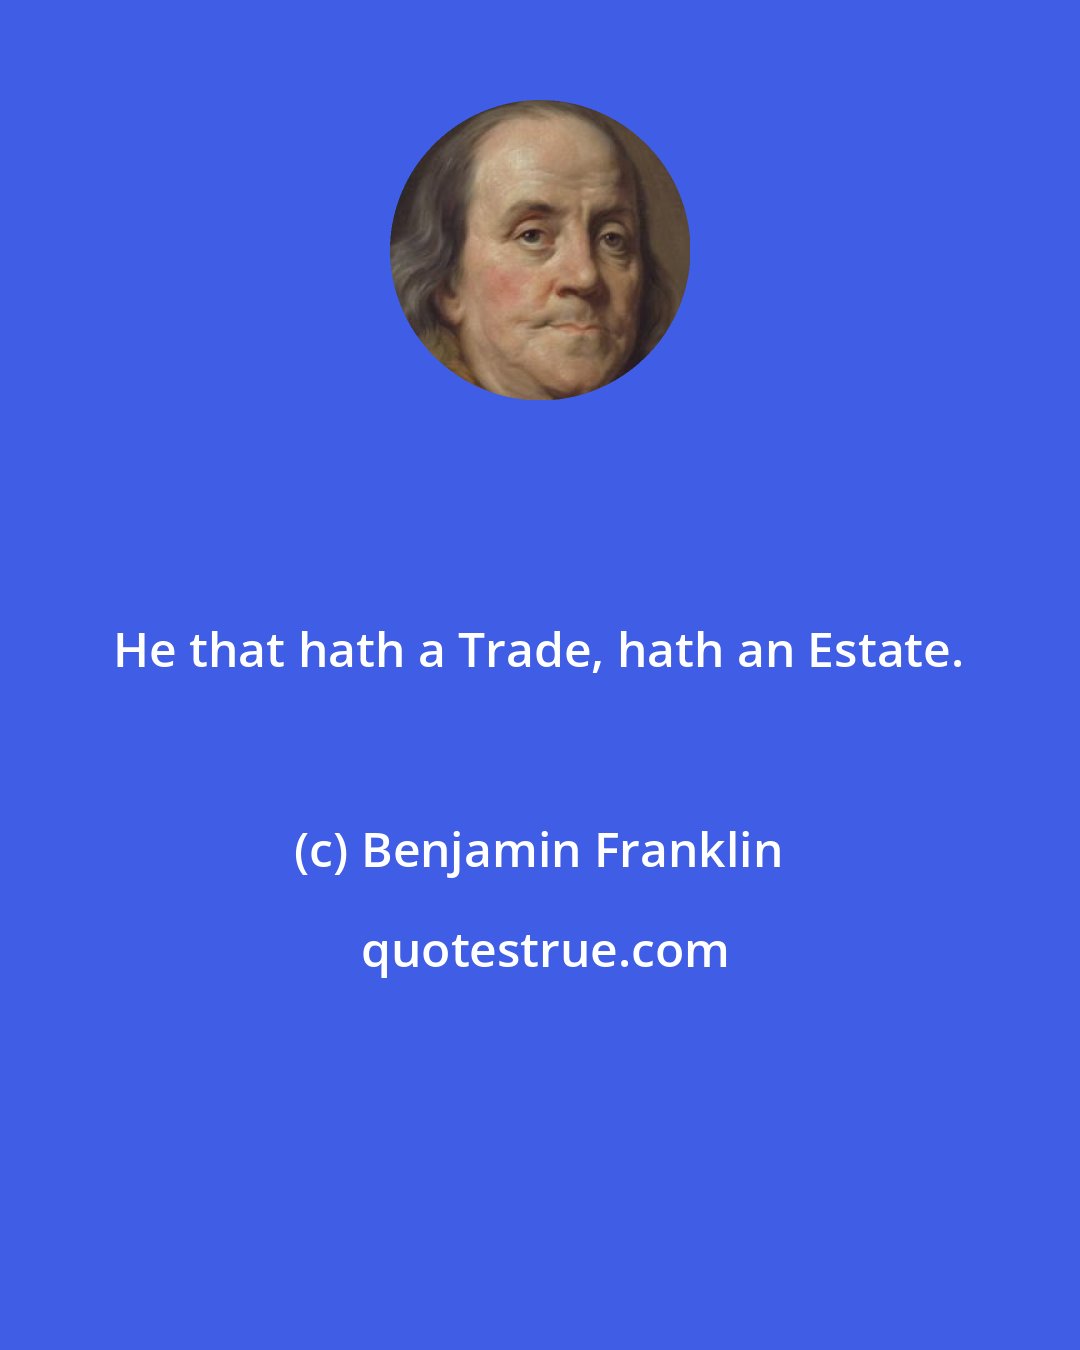 Benjamin Franklin: He that hath a Trade, hath an Estate.